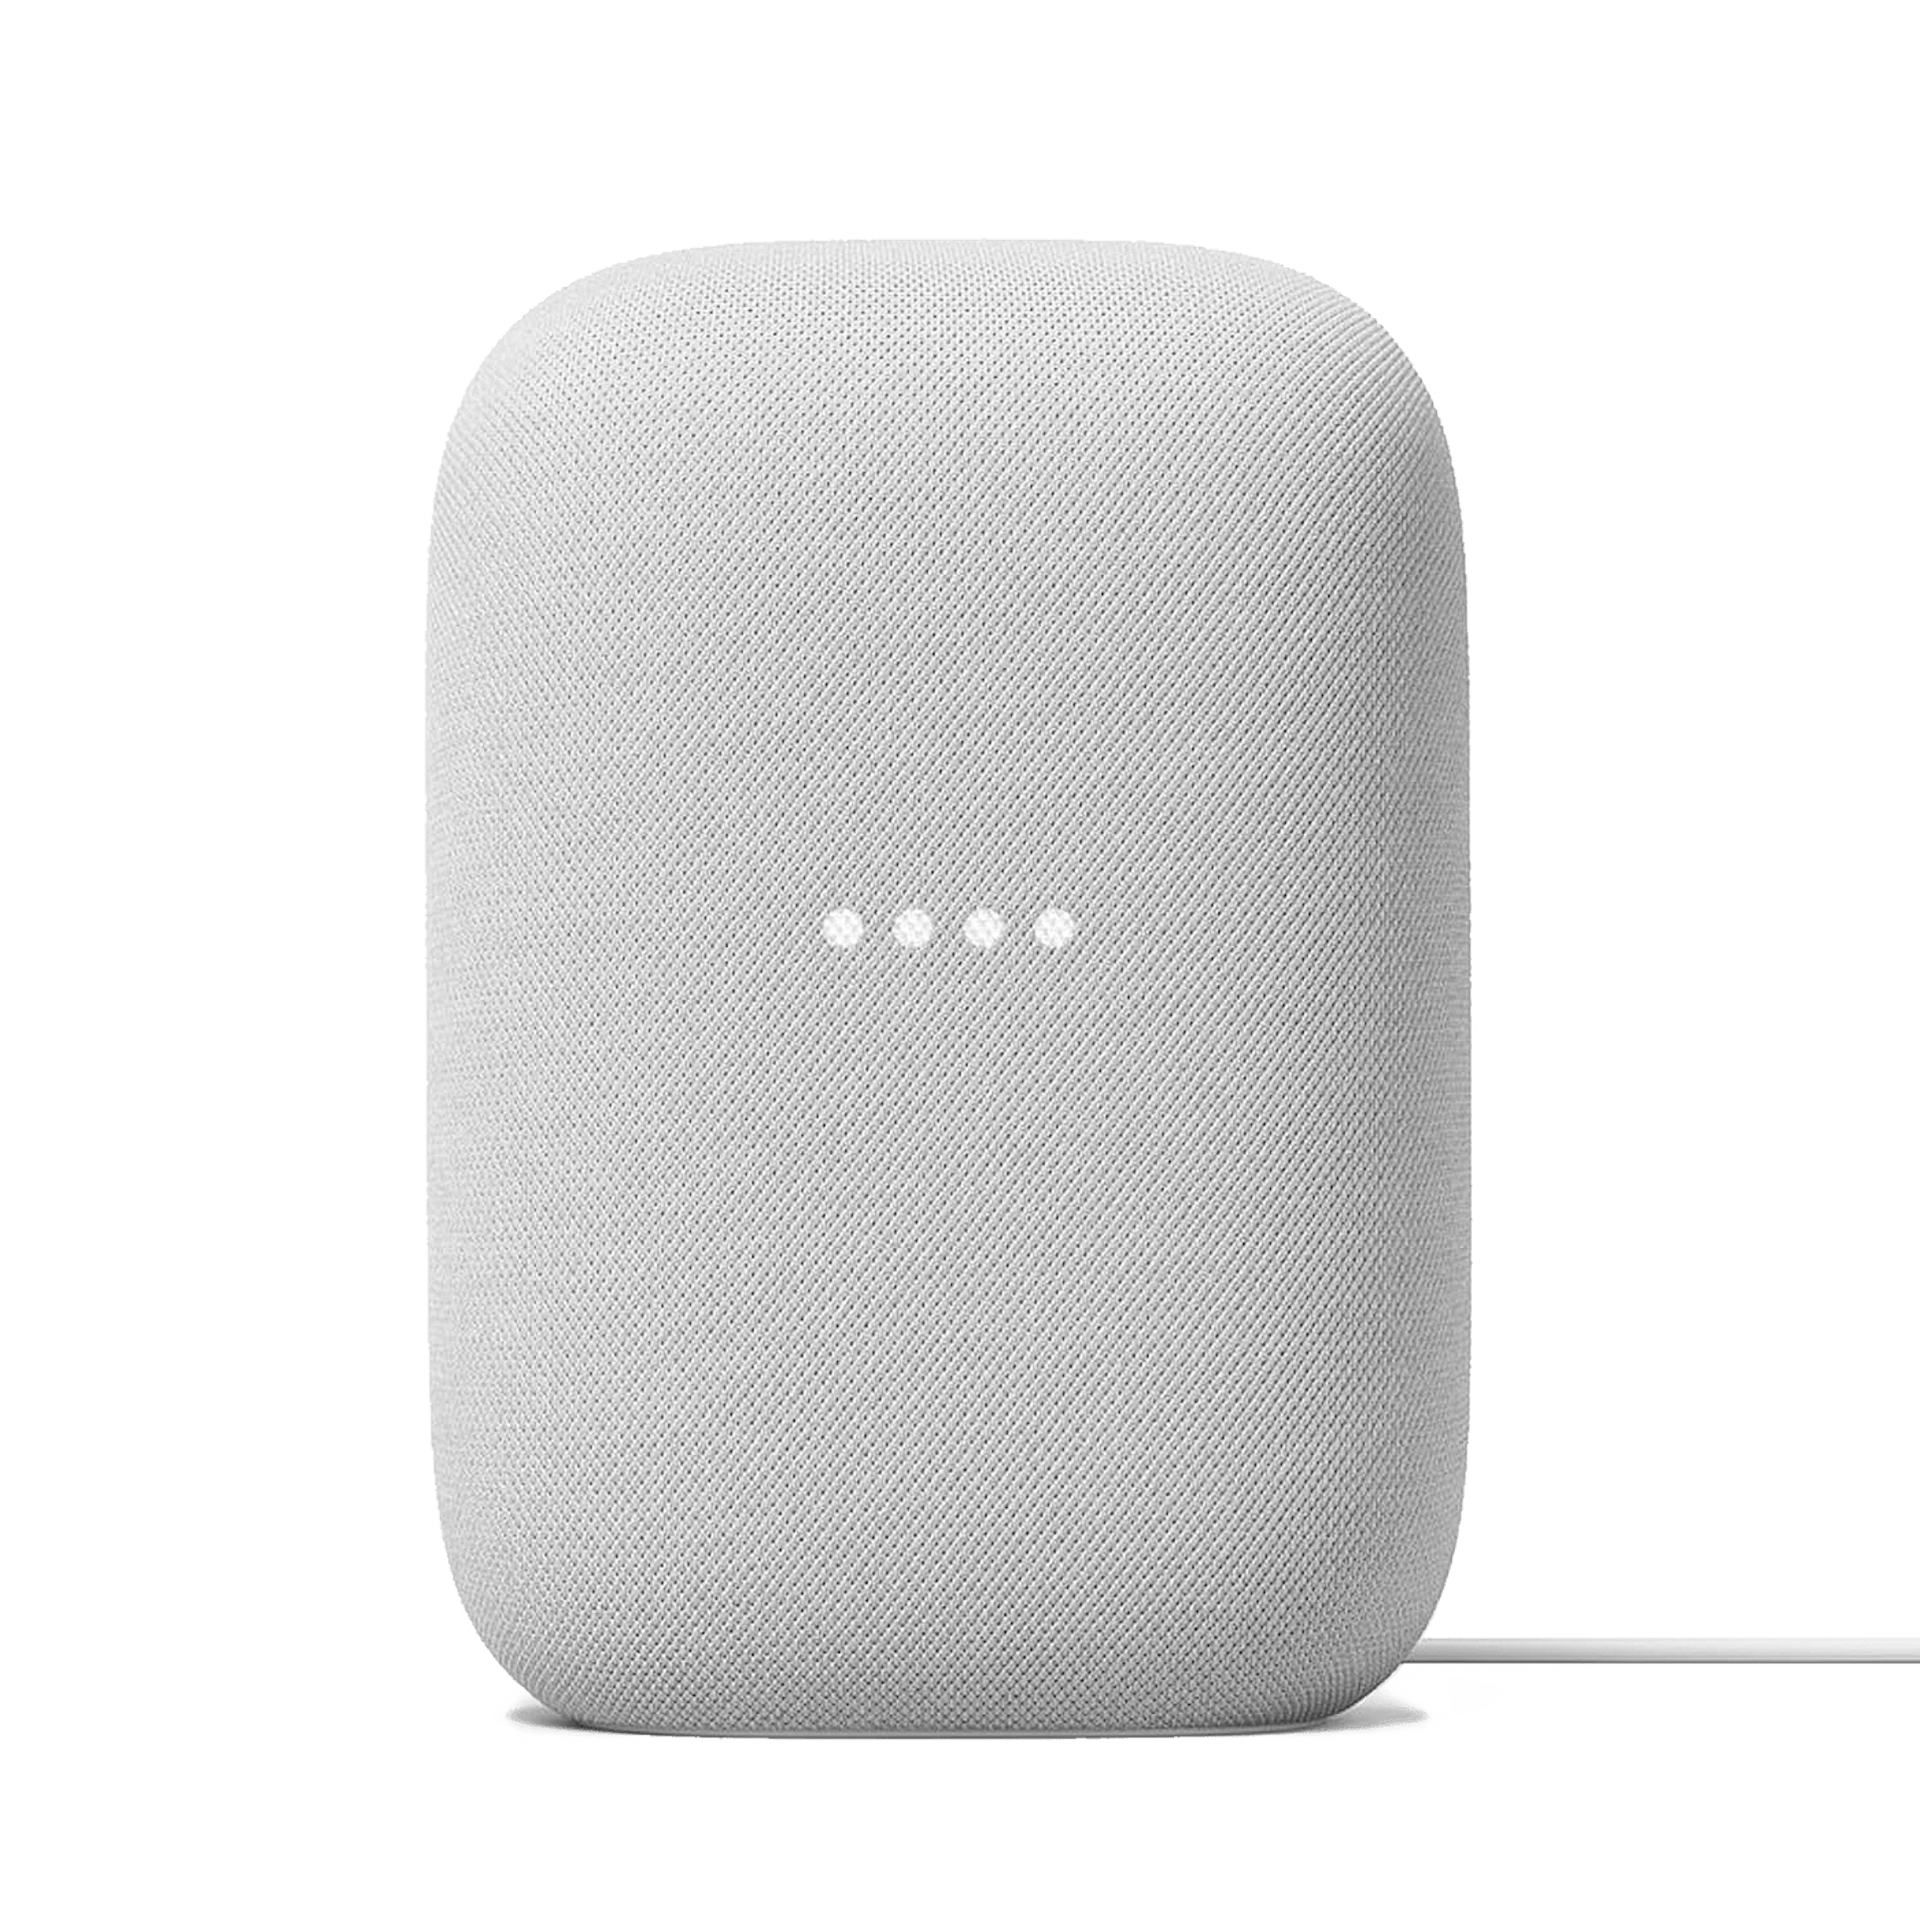 Google Nest Audio – Slimme speaker en spraakassistent